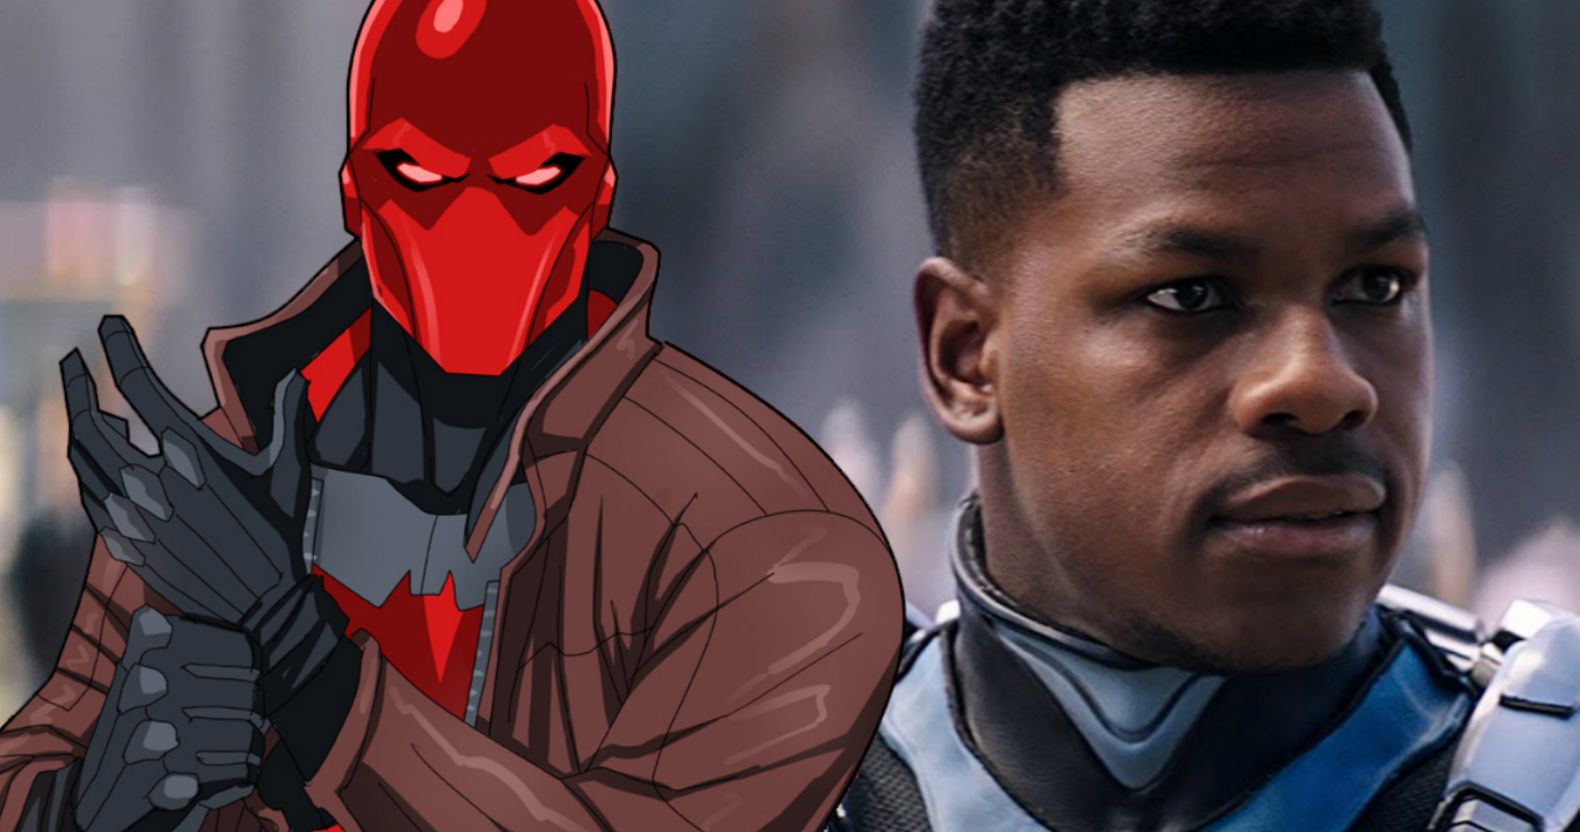 John Boyega Is Red Hood in DC Fan Art Endorsed by Former Star Wars Actor